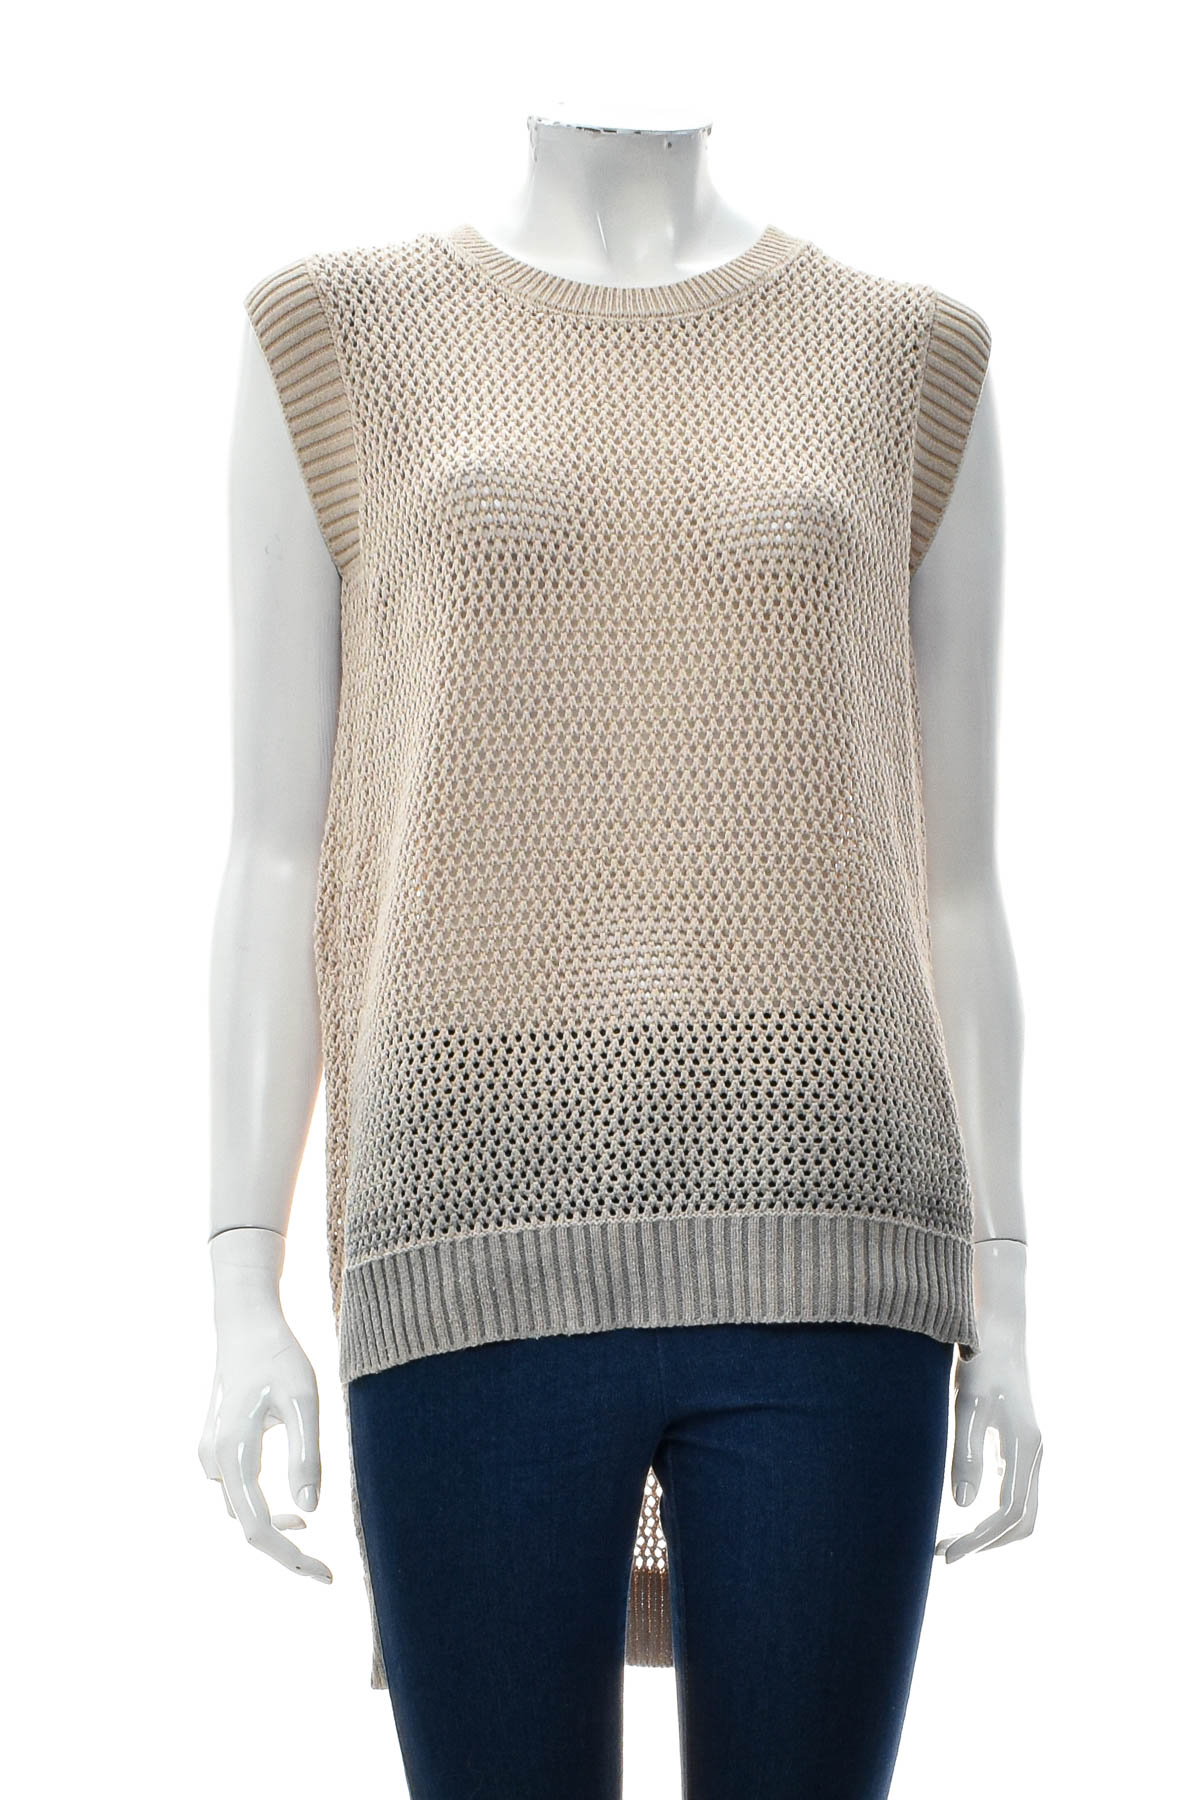 Women's sweater - Alba Moda - 0